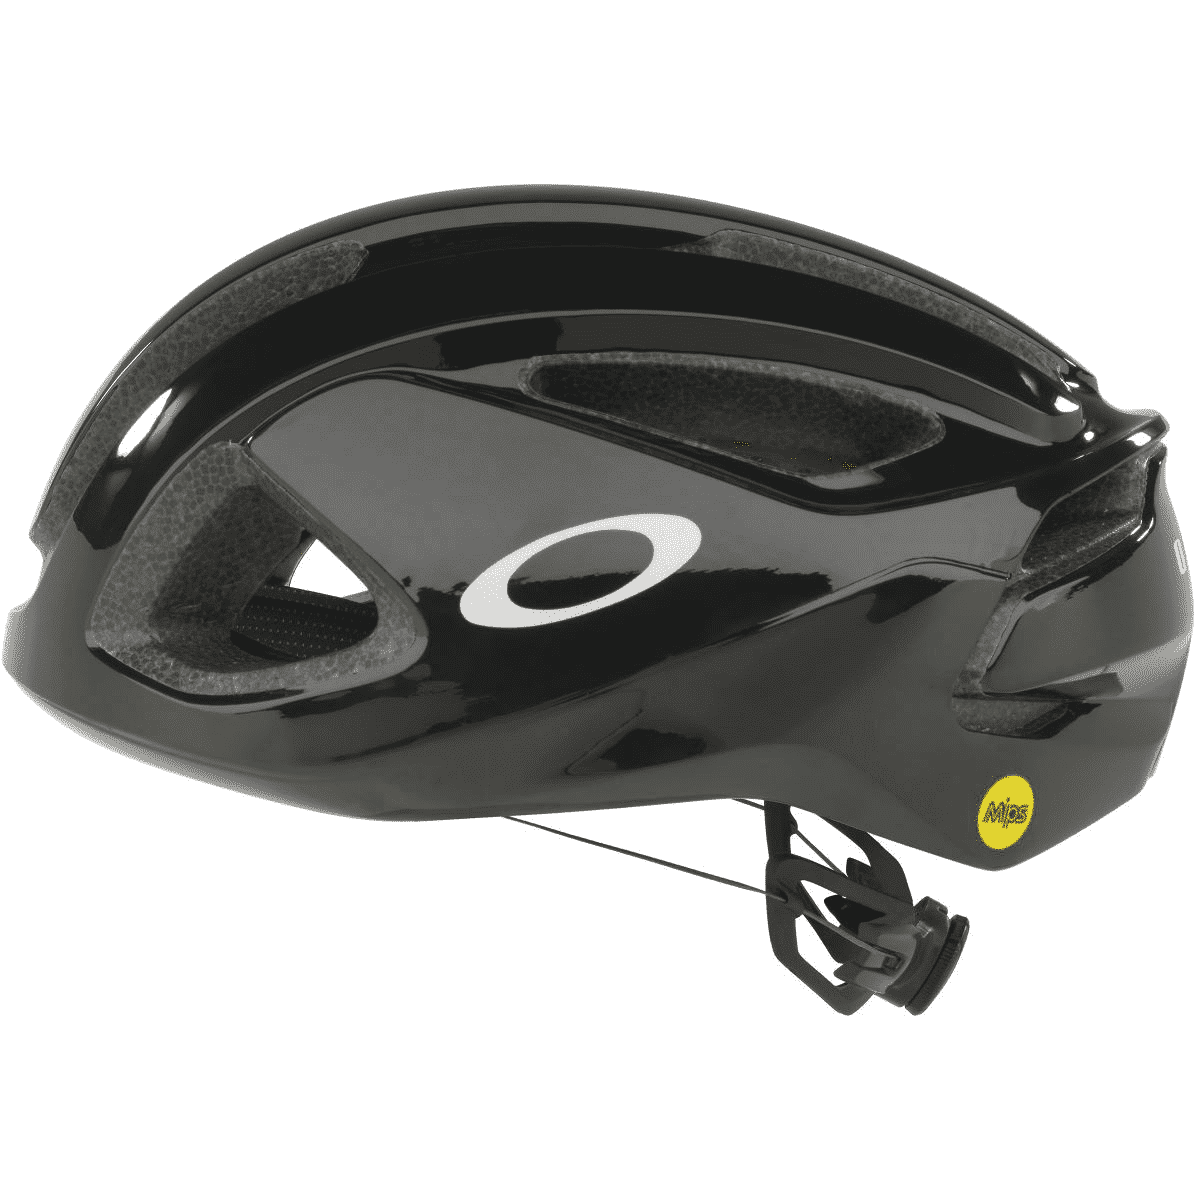 Oakley ARO3 - Road bike helmet